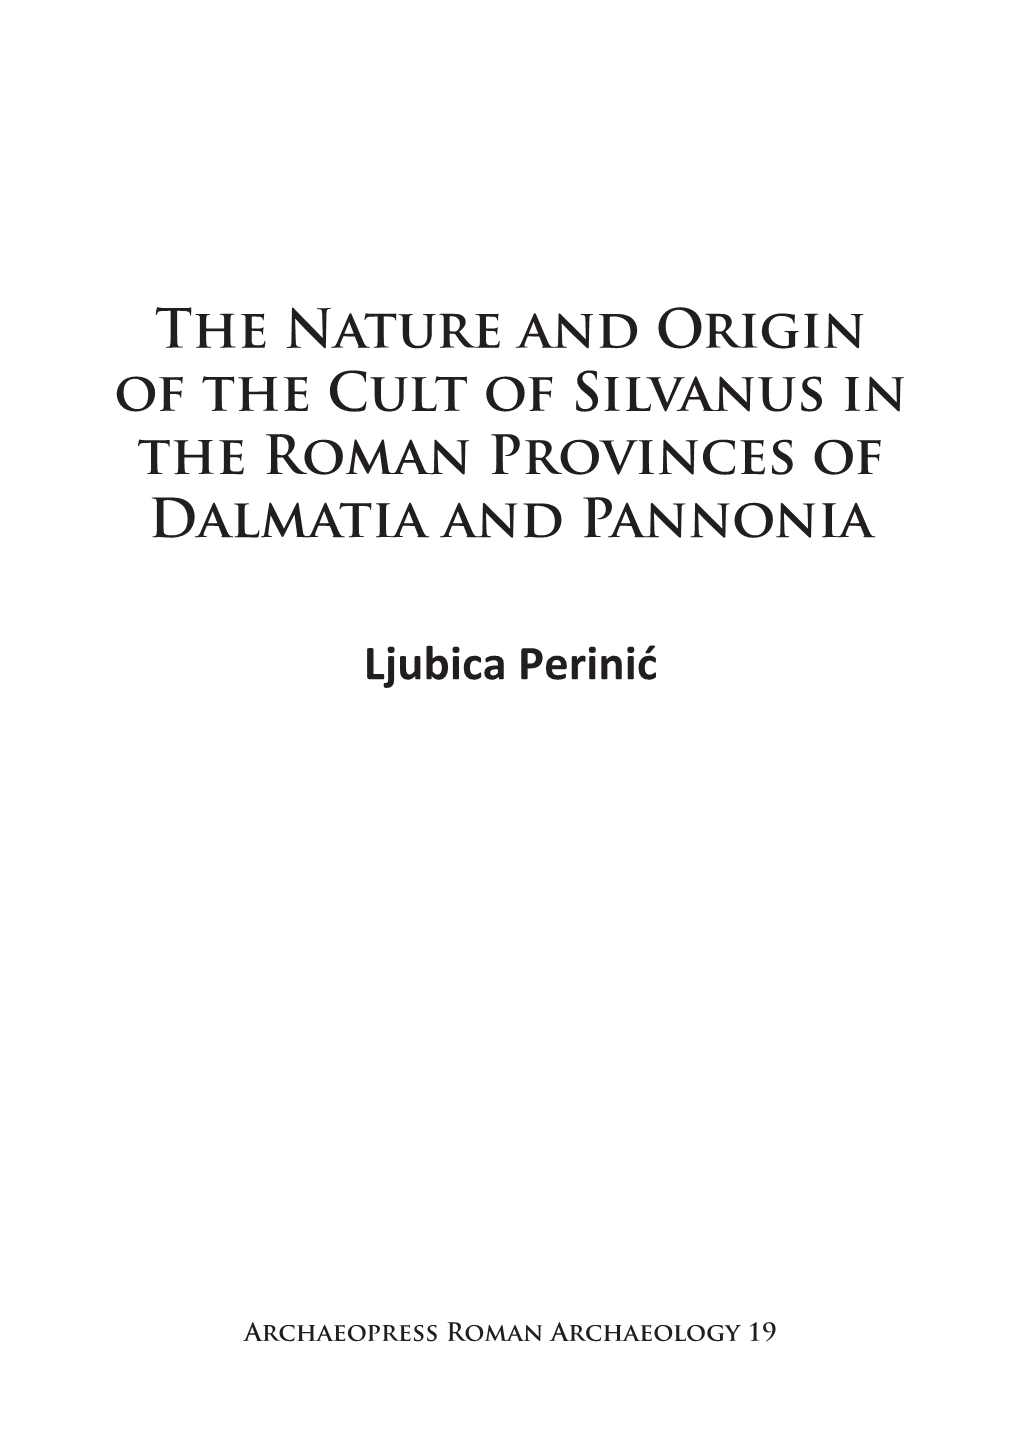 The Nature and Origin of the Cult of Silvanus in the Roman Provinces of Dalmatia and Pannonia